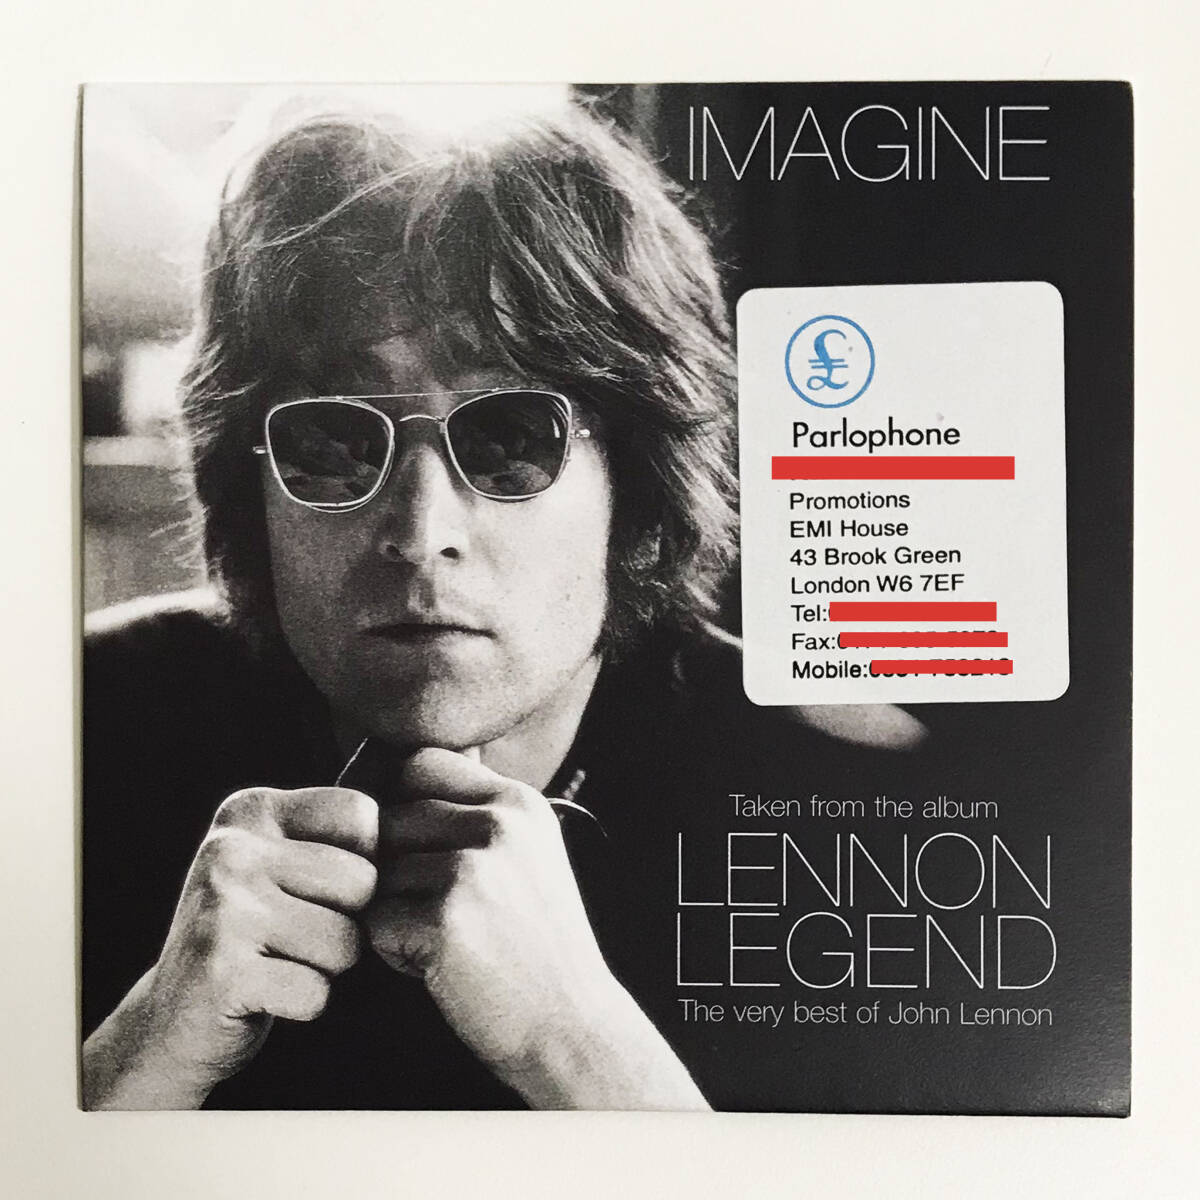 [ бесплатная доставка!] редкость!JOHN LENNON John * Lennon [Imagine] Pro motion запись бумага жакет specification CD LENNON LEGEND